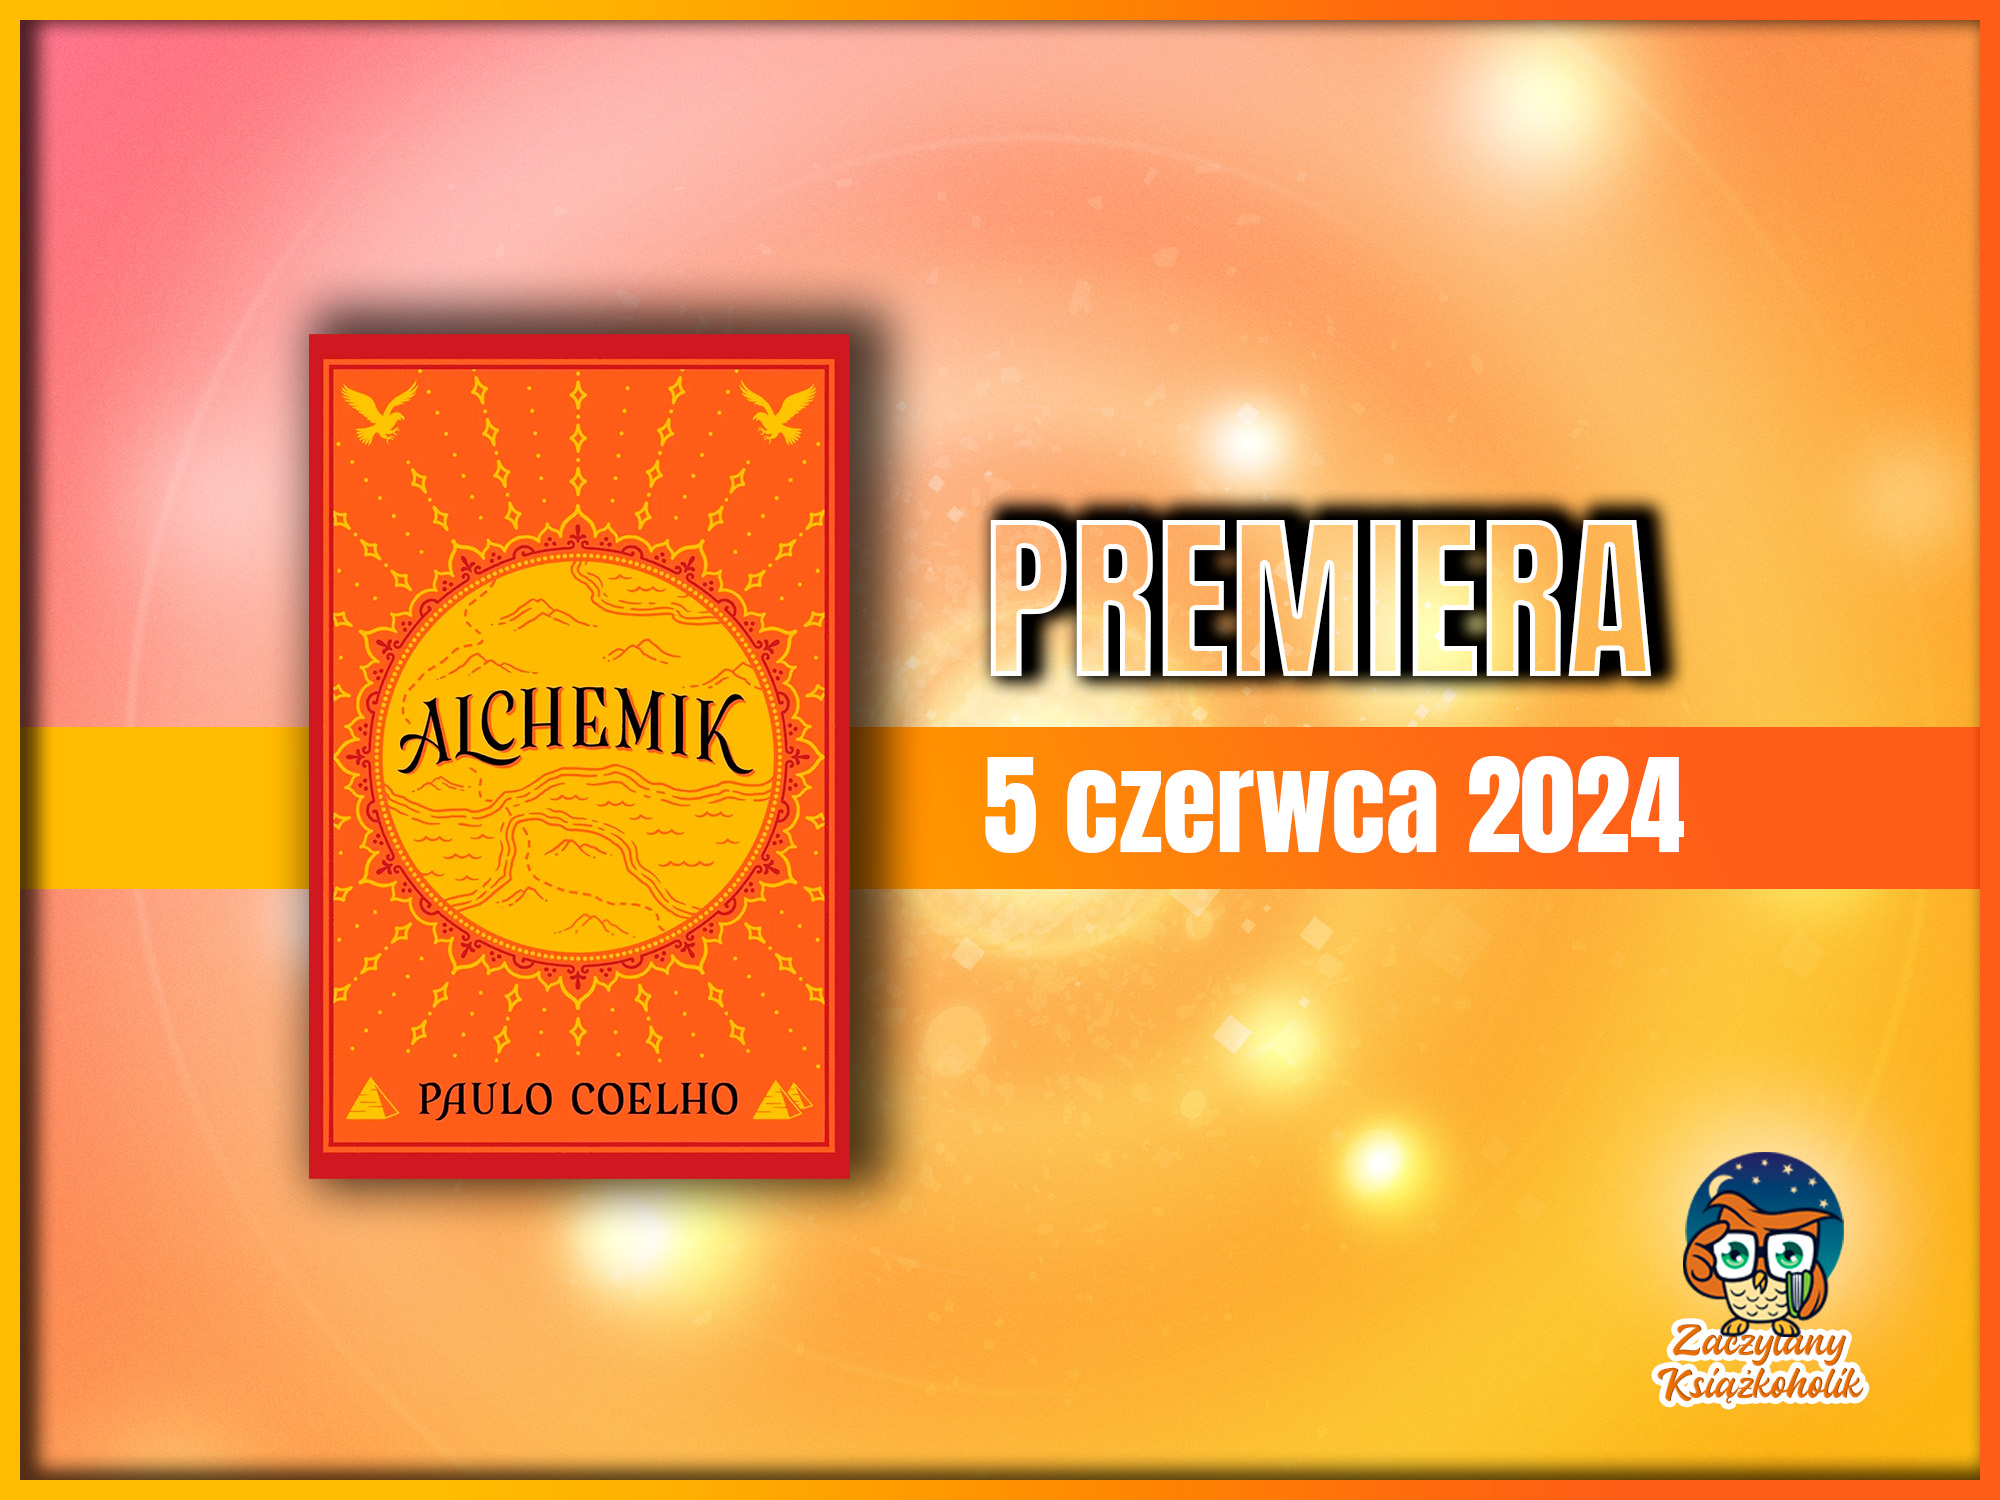 Alchemik - Paulo Coelho - zaczytanyksiazkoholik.pl